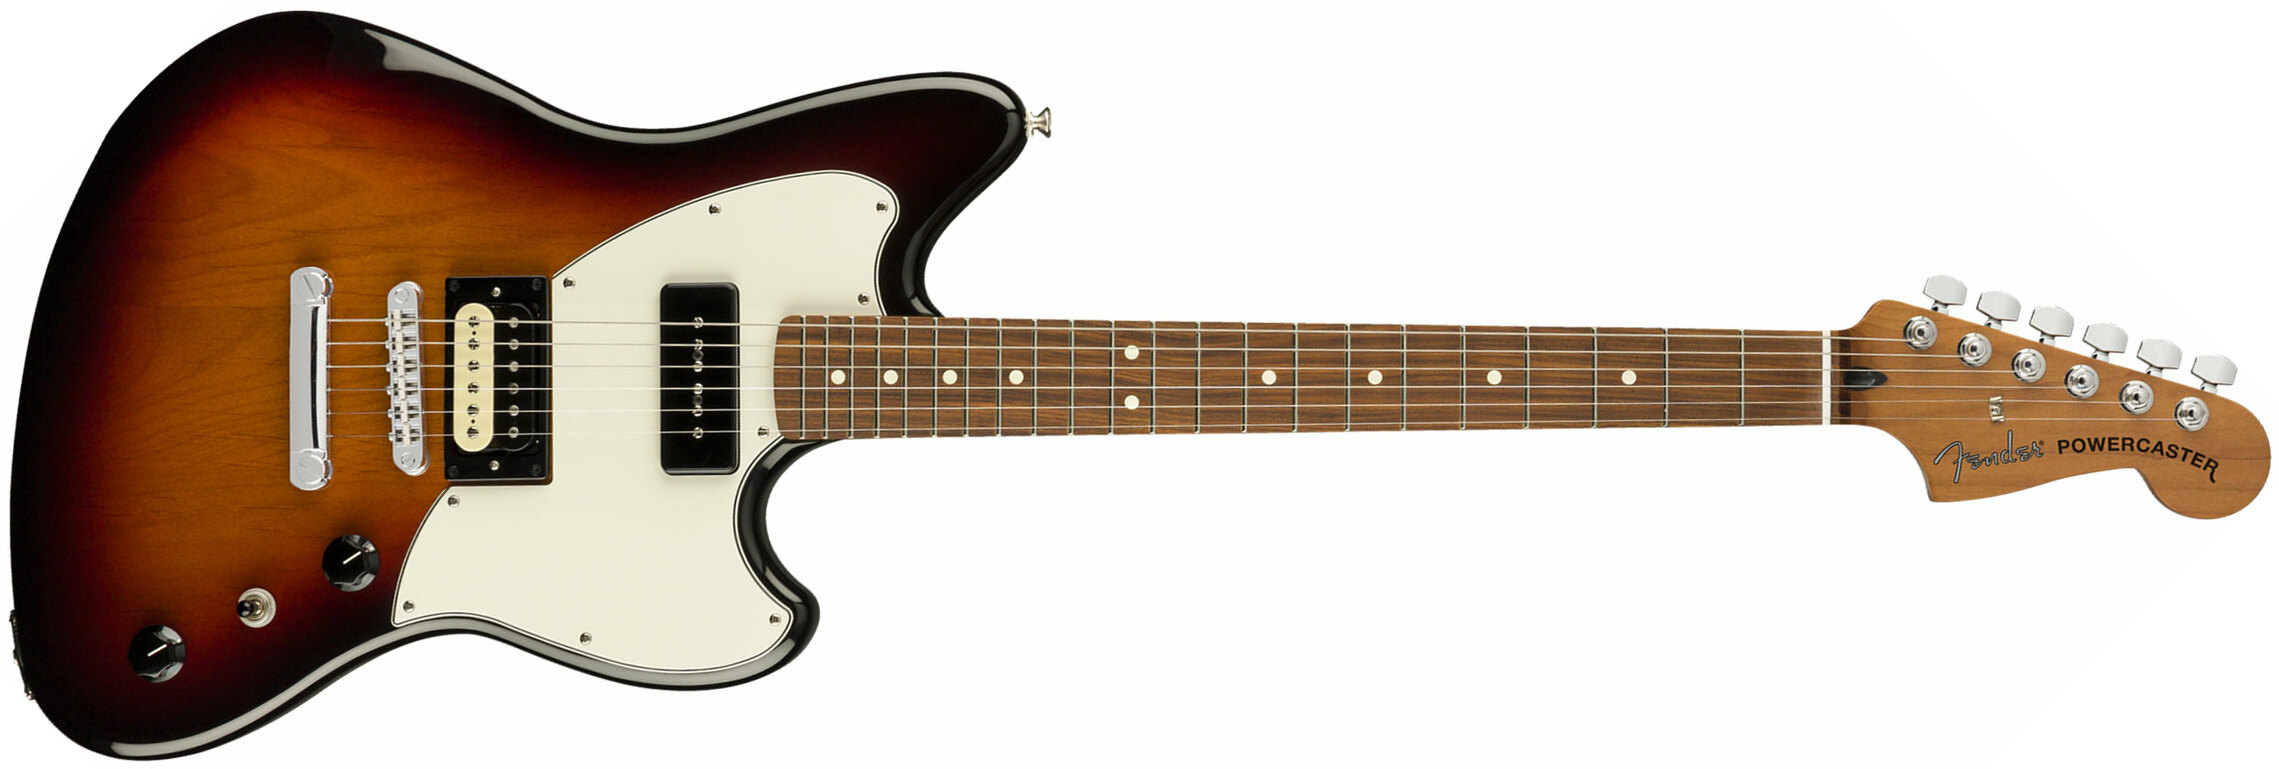 Fender Powercaster Alternate Reality Ltd Hp90 Ht Pf - 3-color Sunburst - Retro-rock elektrische gitaar - Main picture